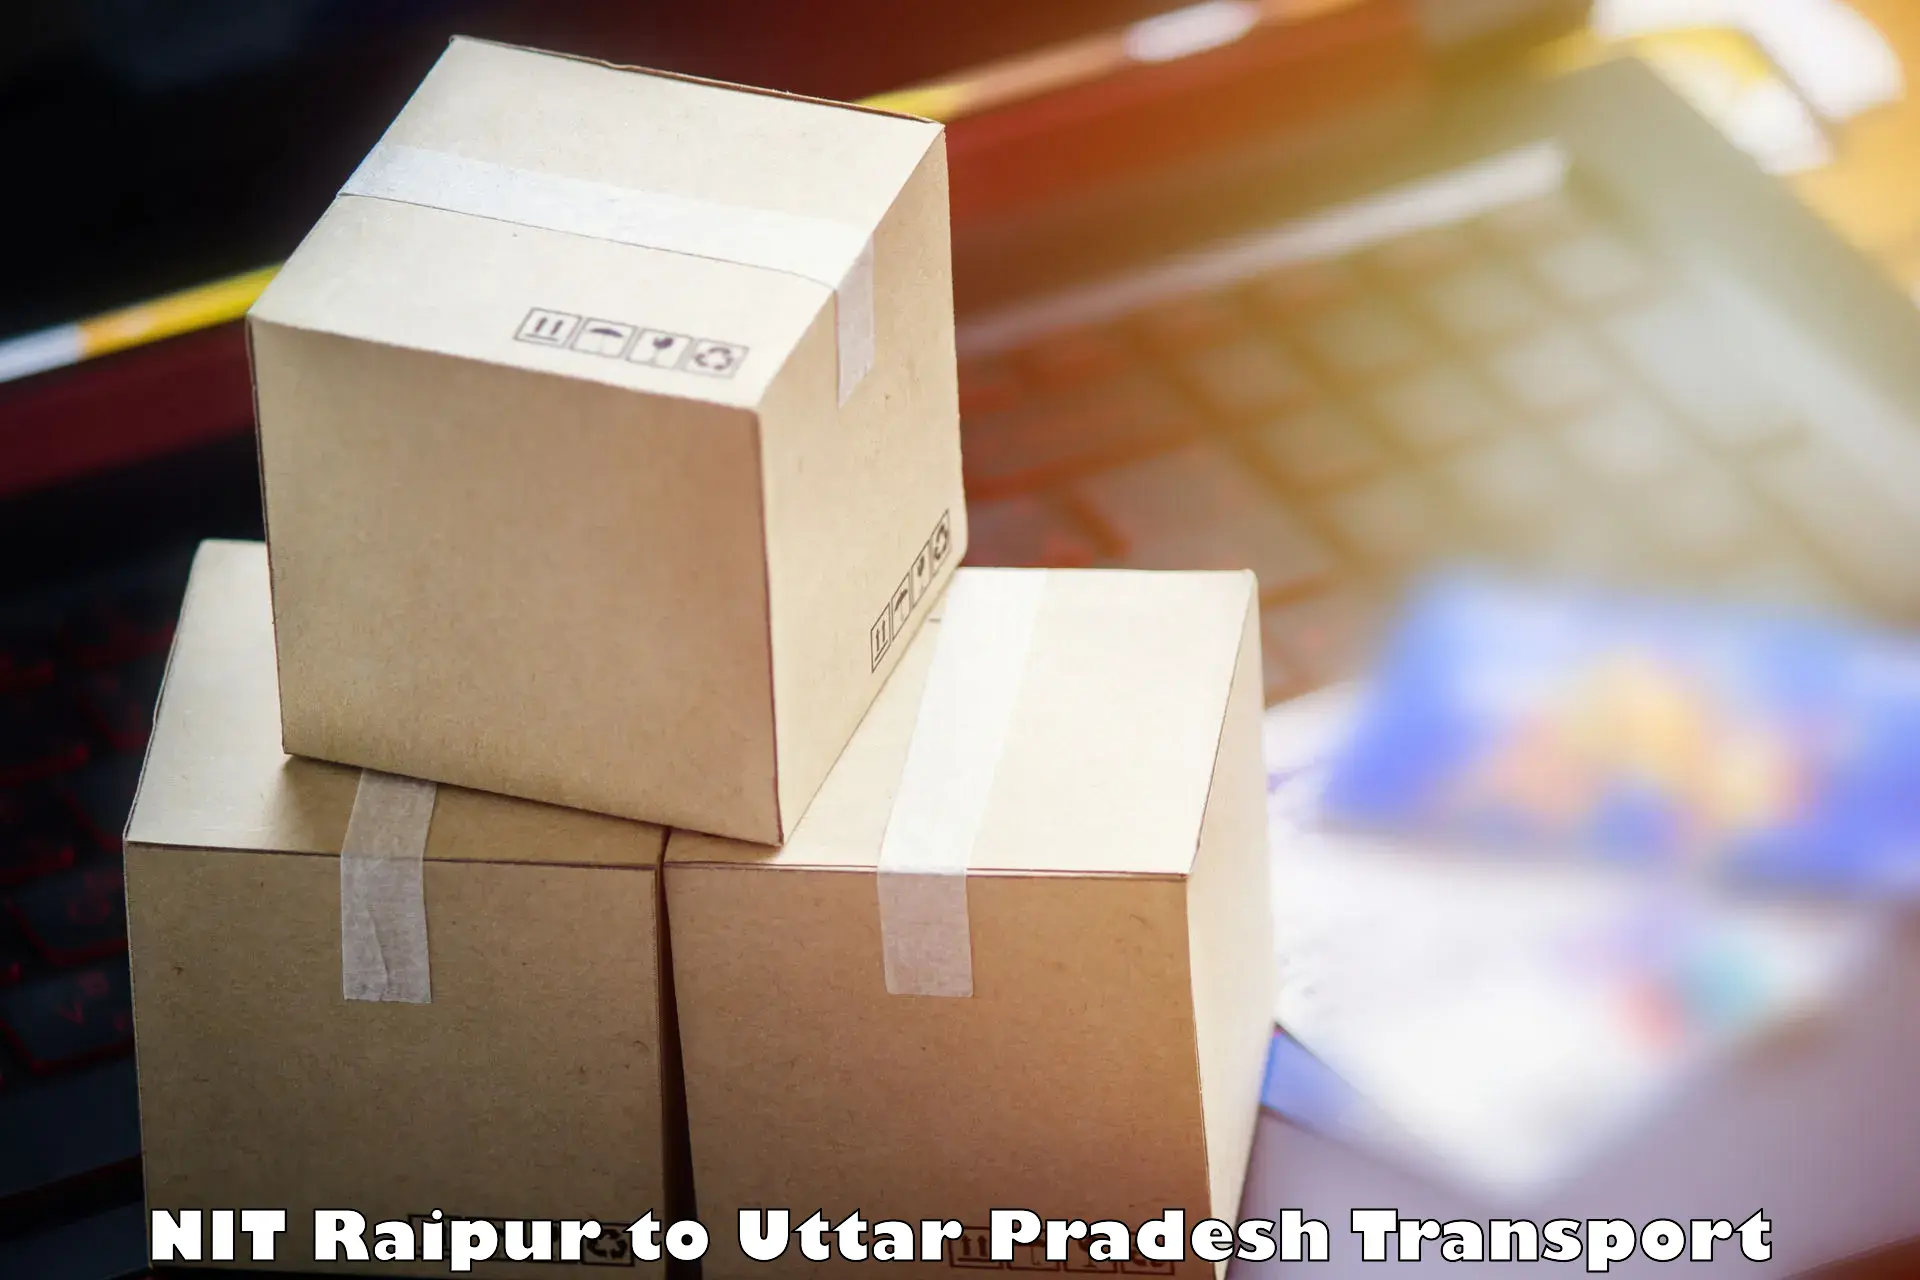 Furniture transport service in NIT Raipur to Uttar Pradesh